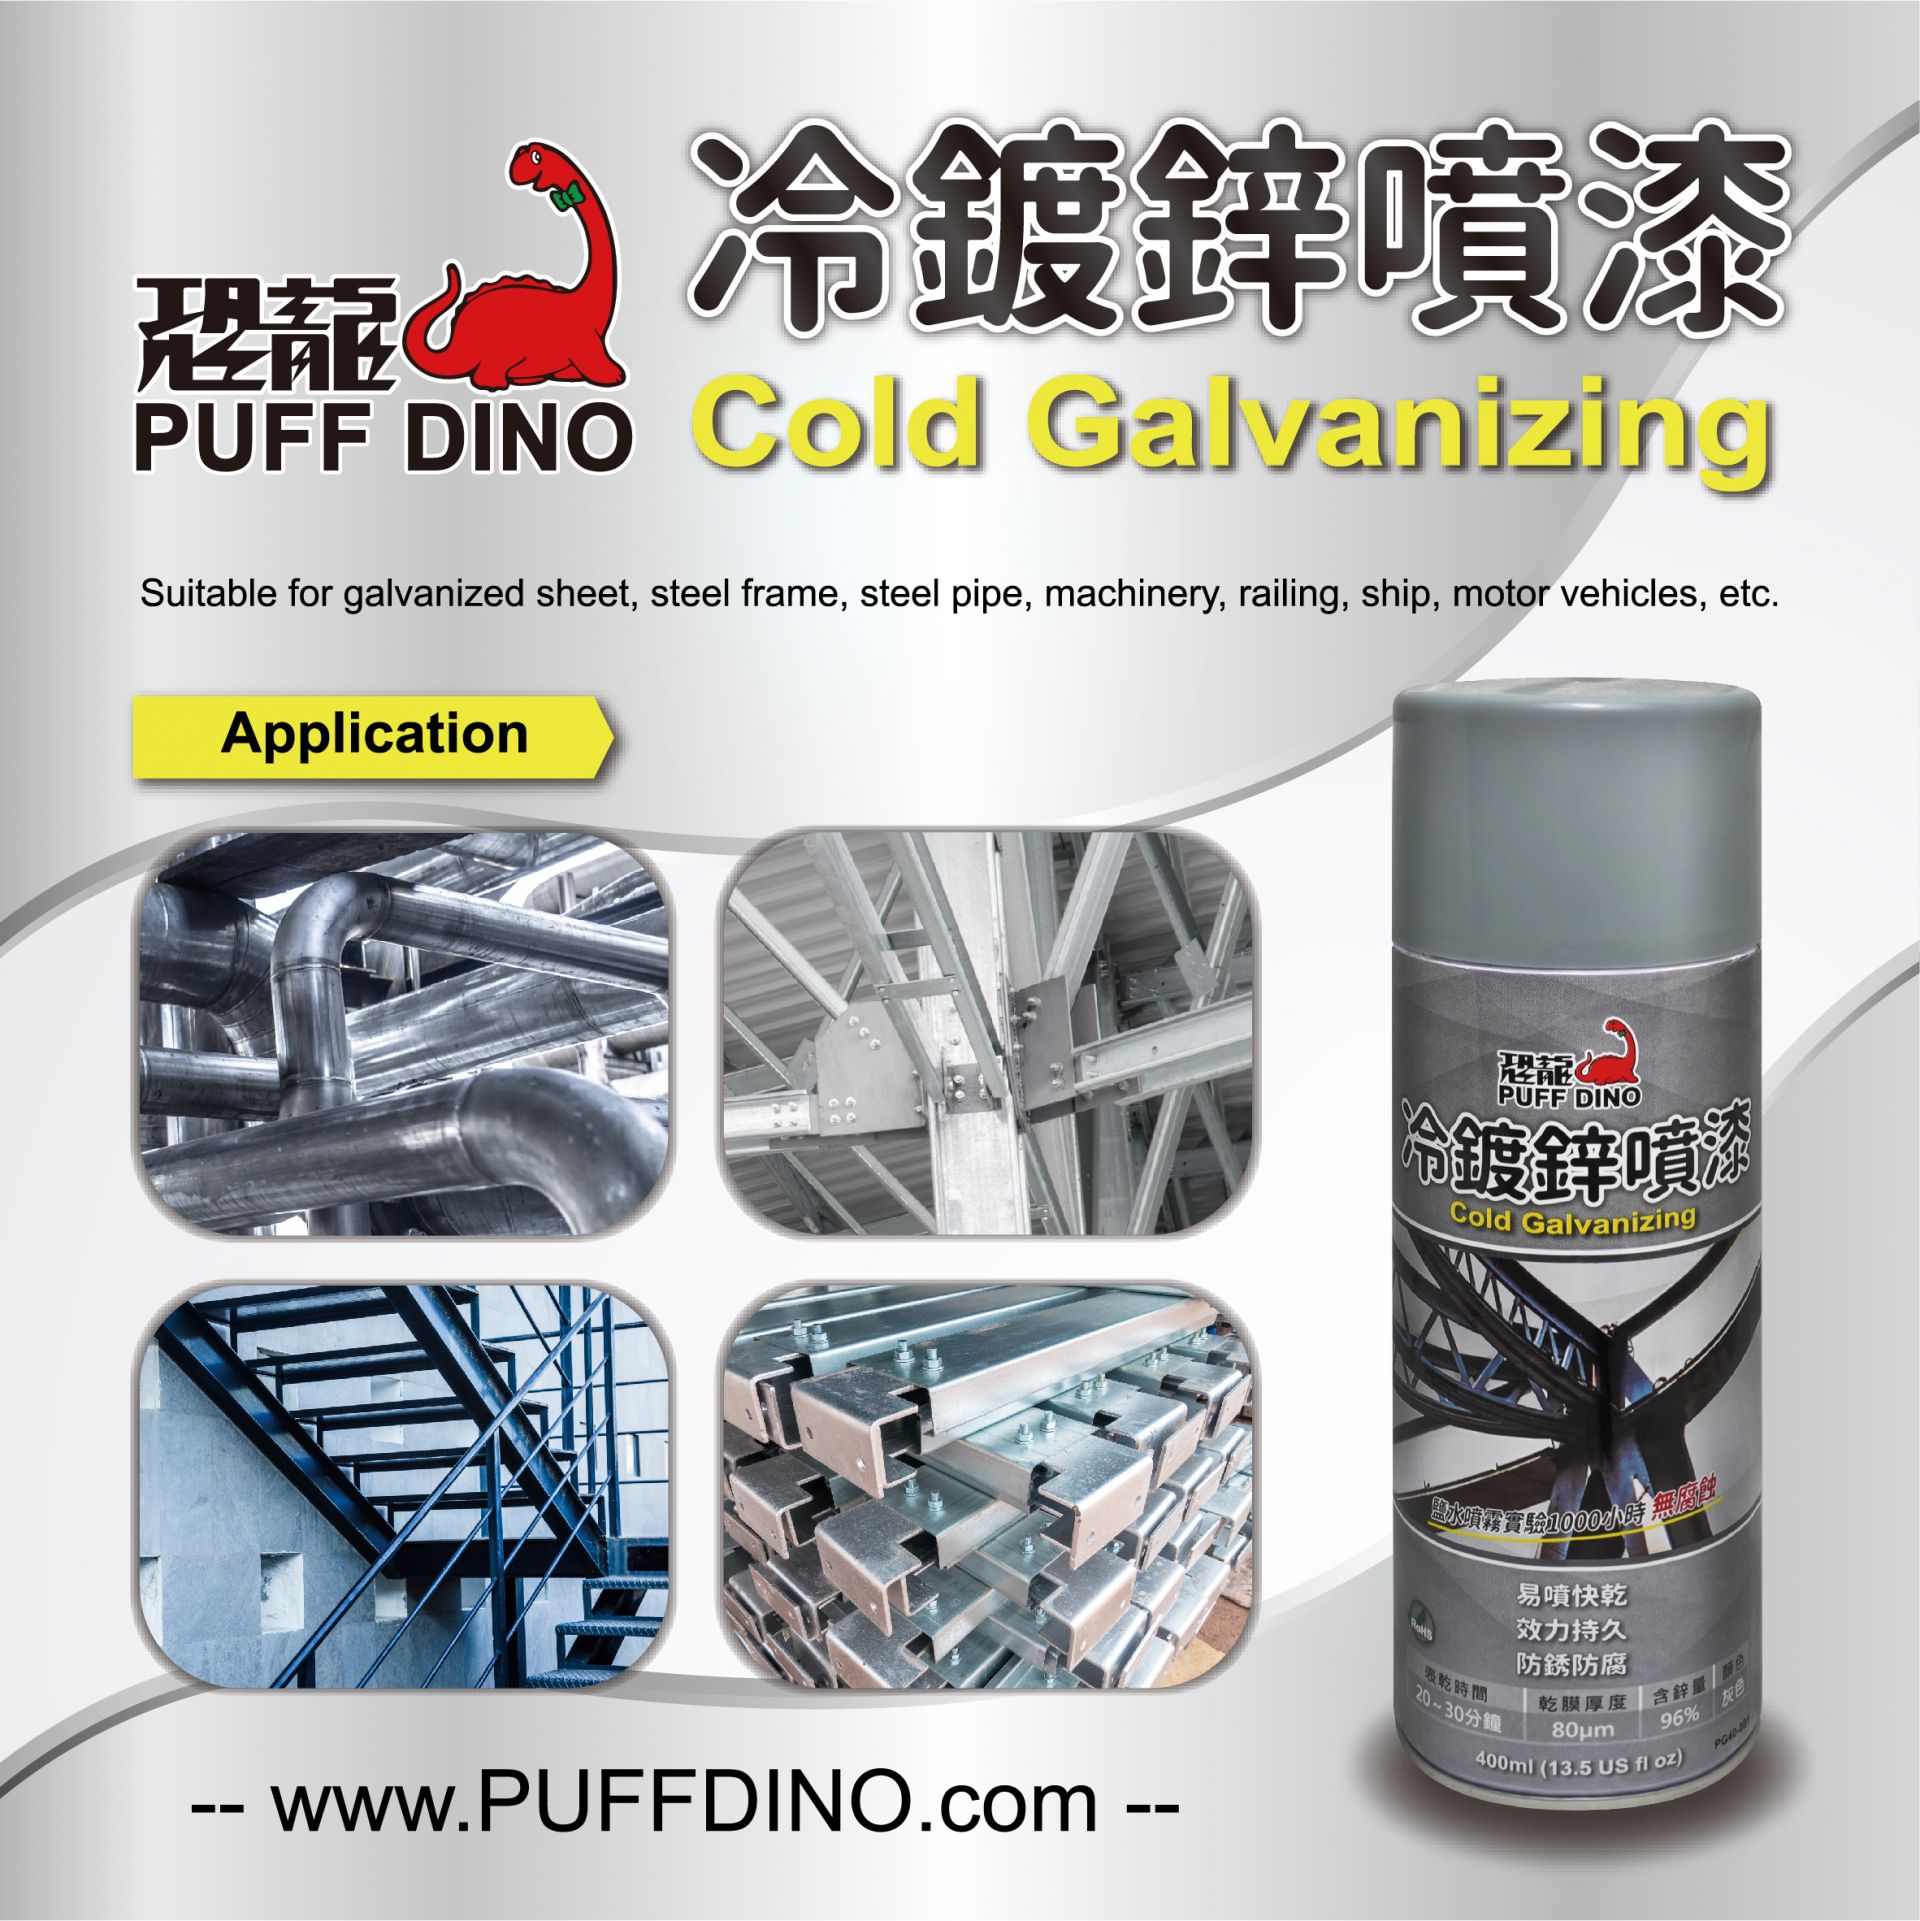 PUFF DINO Cold Galvanizing-Application